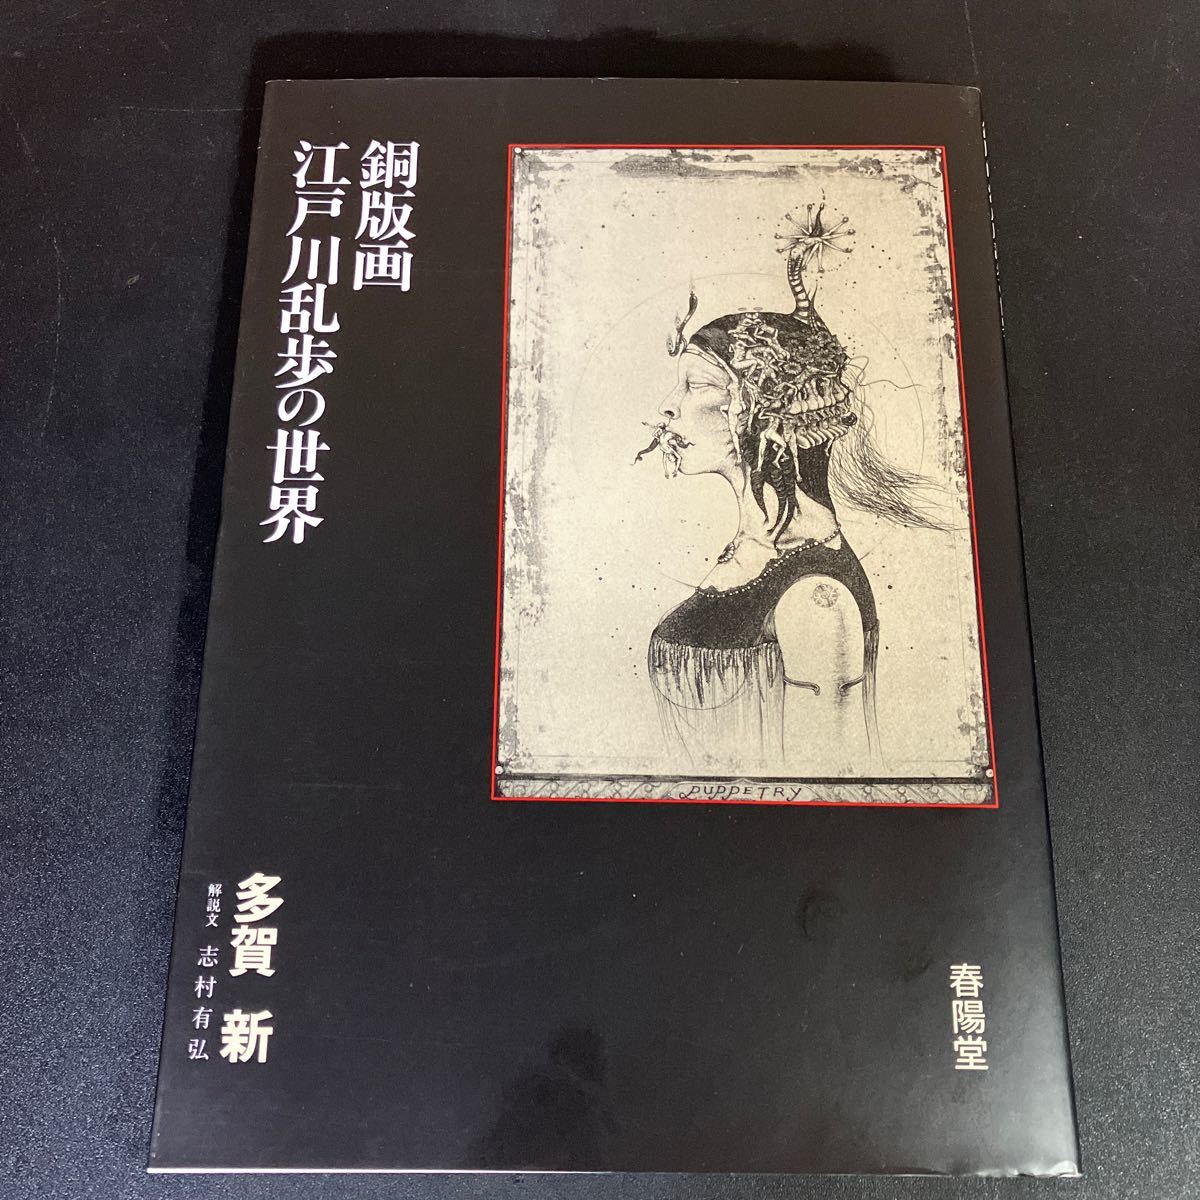 23-11-20 El mundo de Edogawa Ranpo en grabados en cobre de Shin Taga, publicado por Shunyodo, Cuadro, Libro de arte, Recopilación, Libro de arte